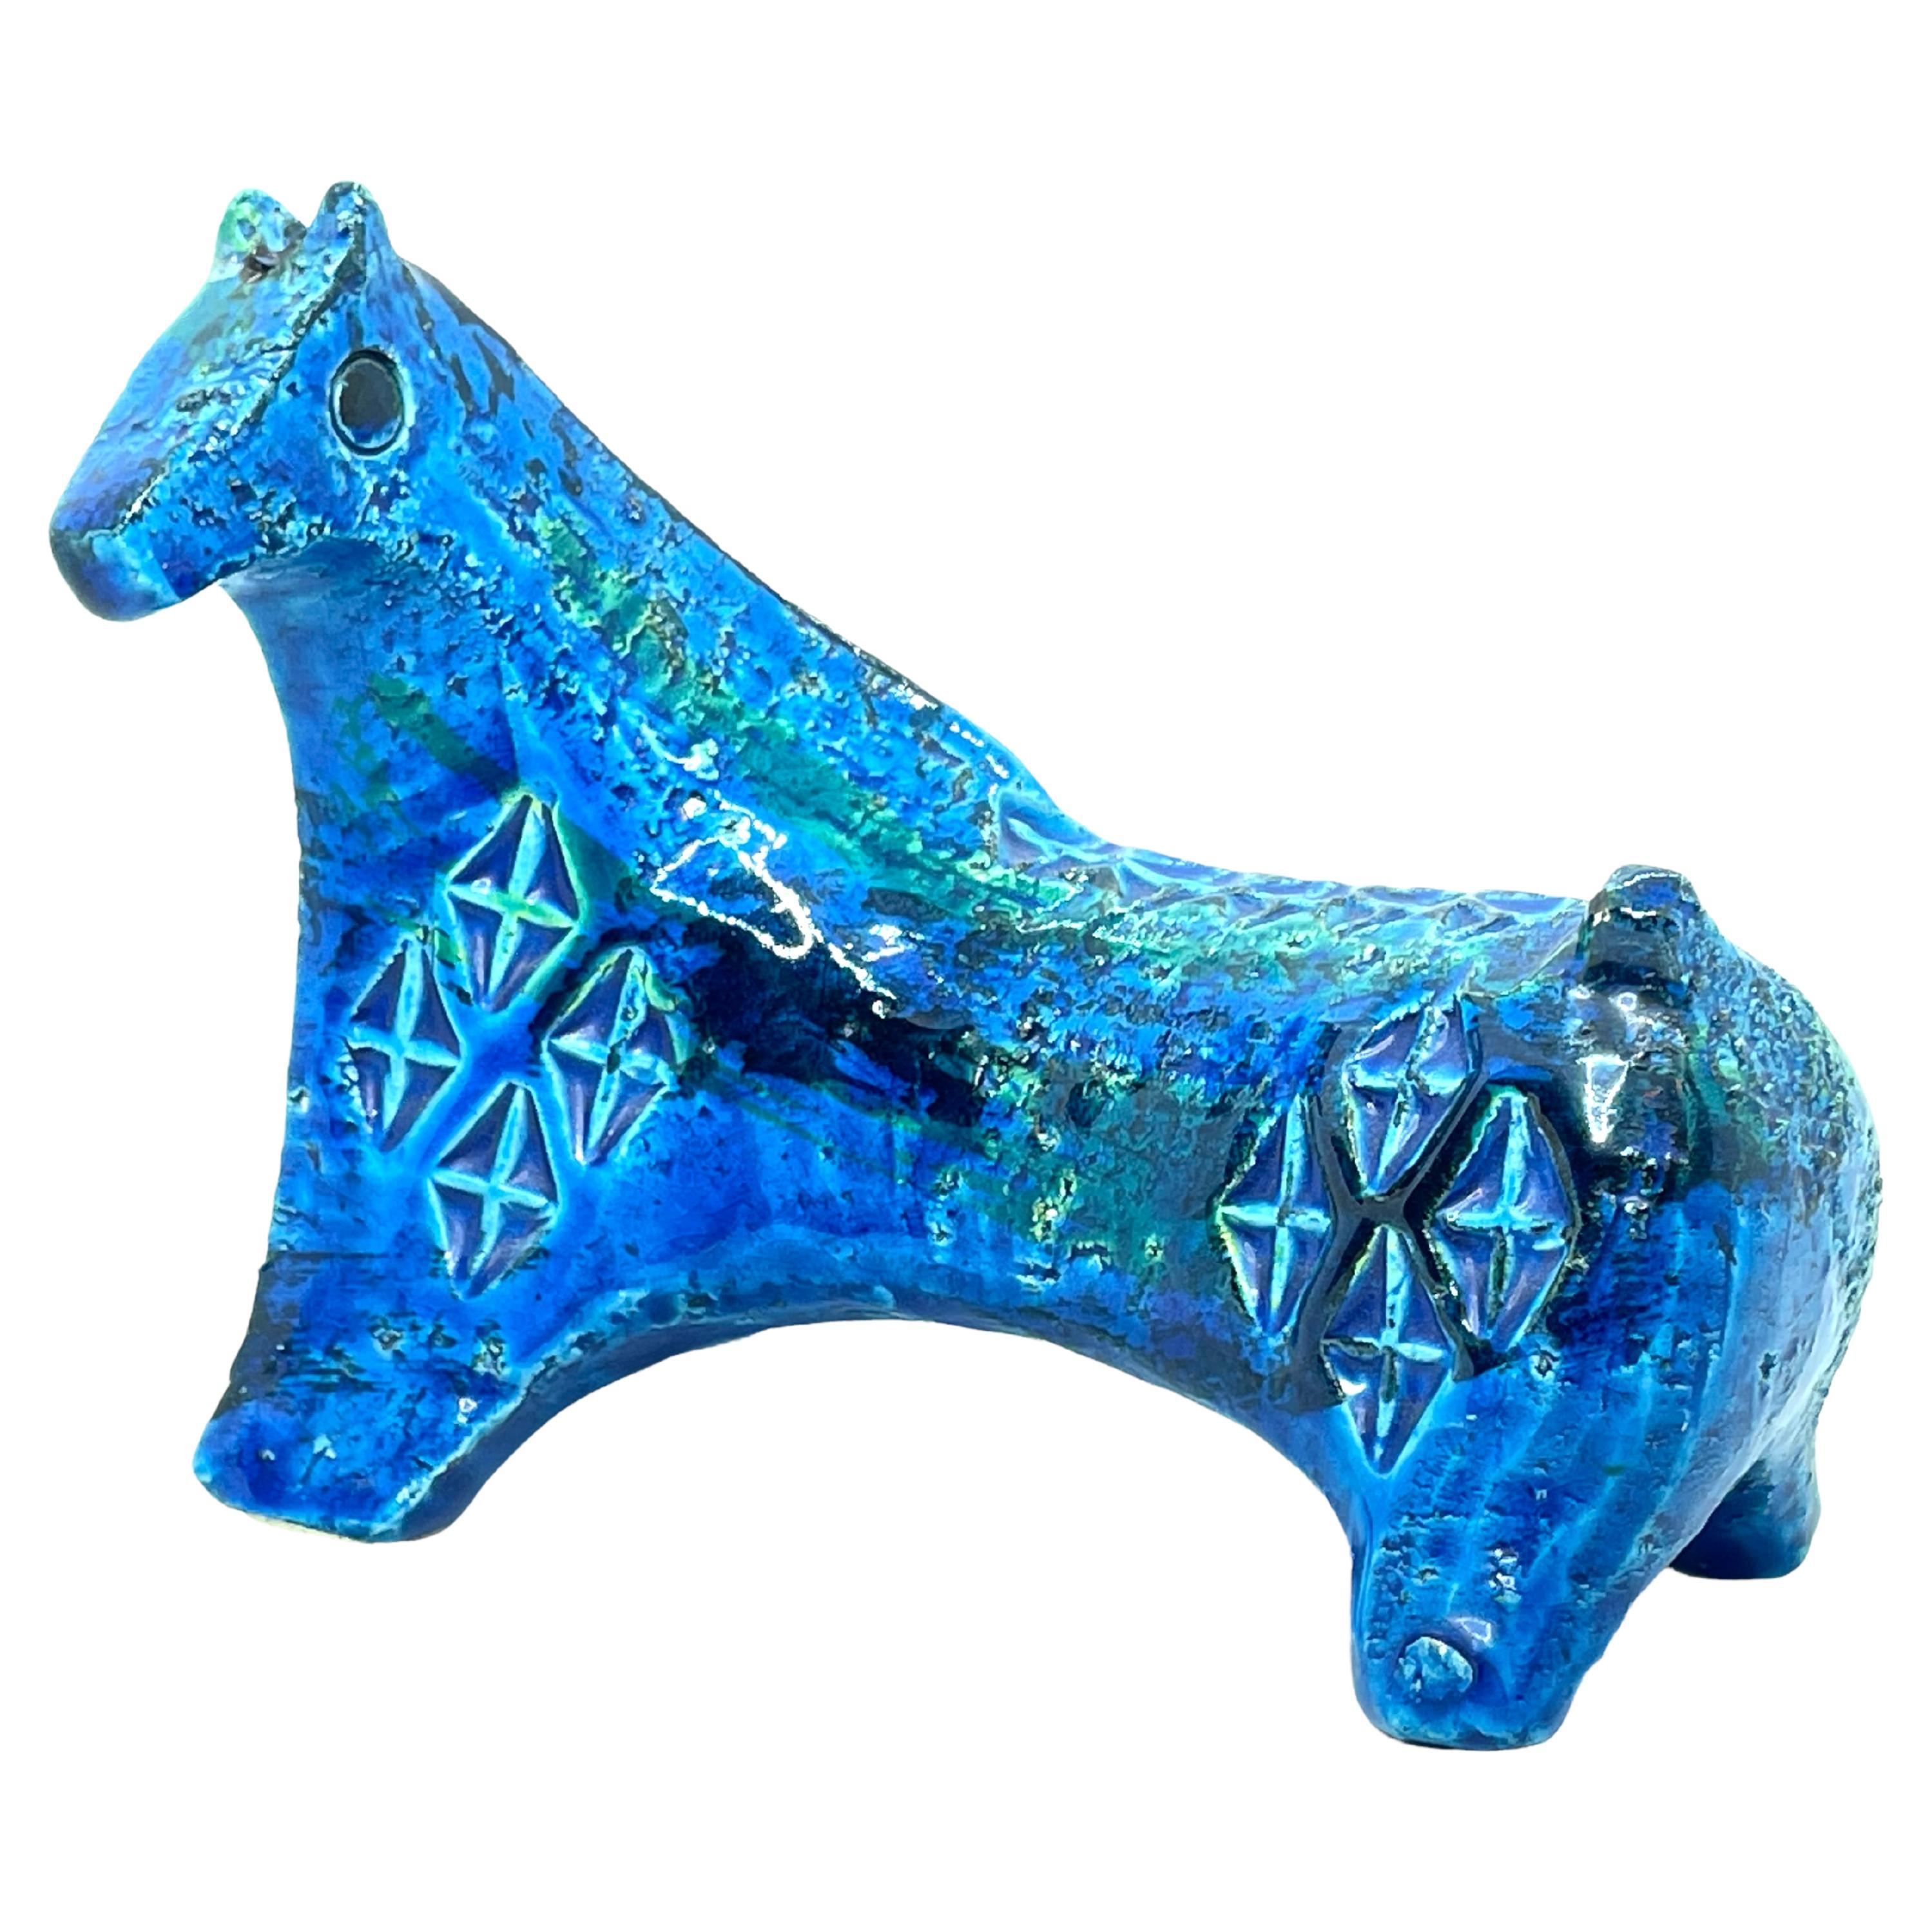 Bitossi Aldo Londi Rimini Blue Horse, Italy, circa 1960s